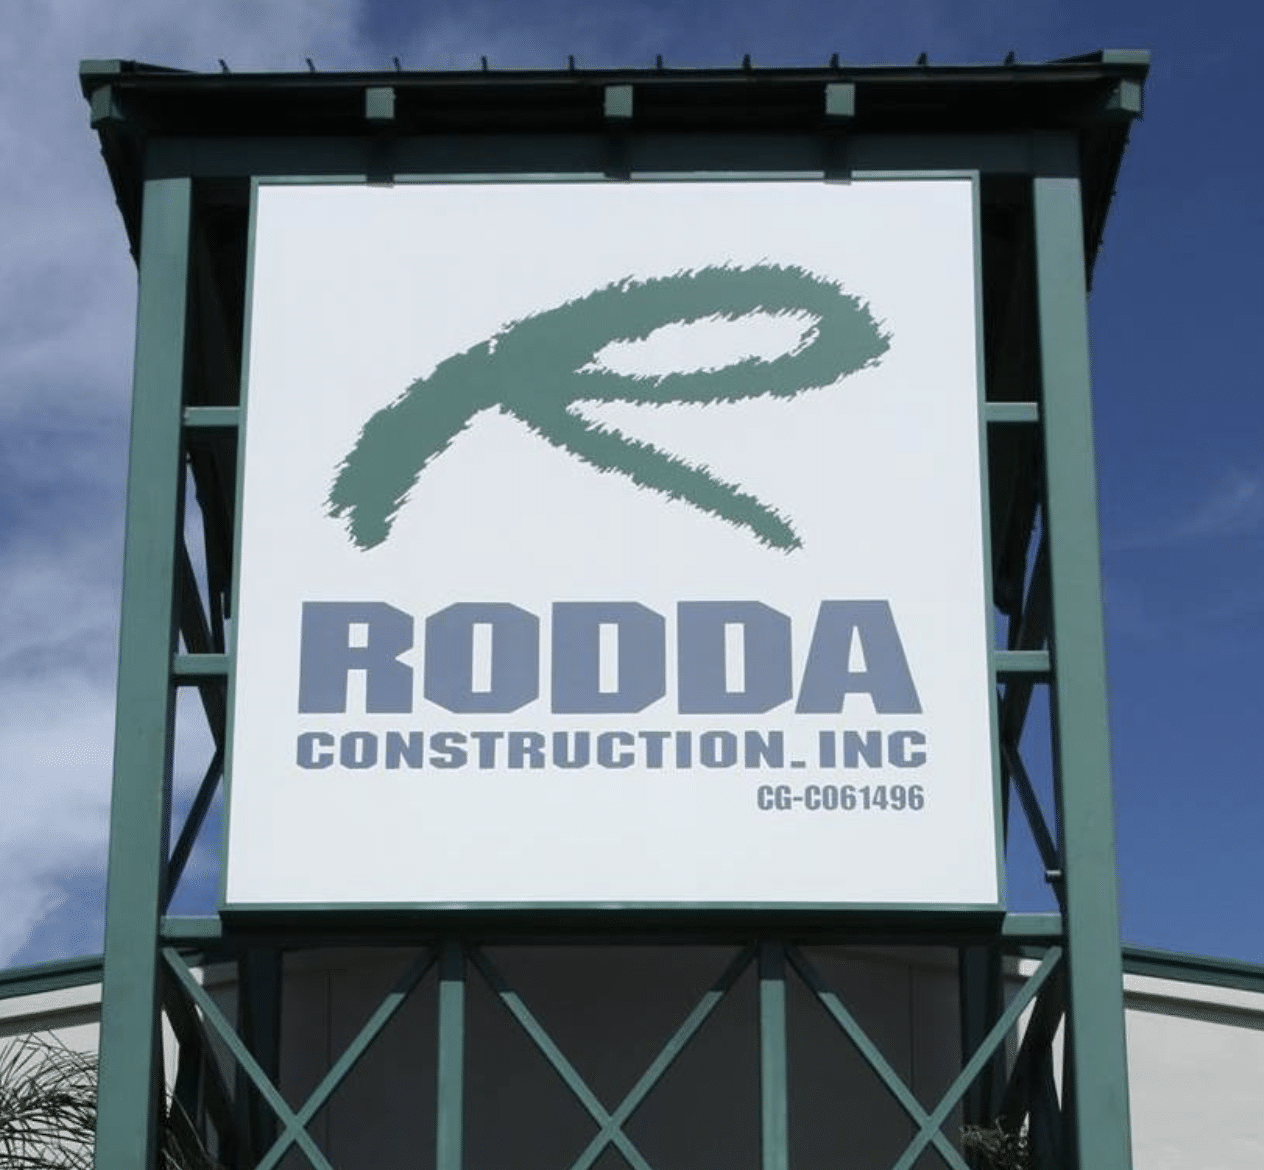 Rodda Construction